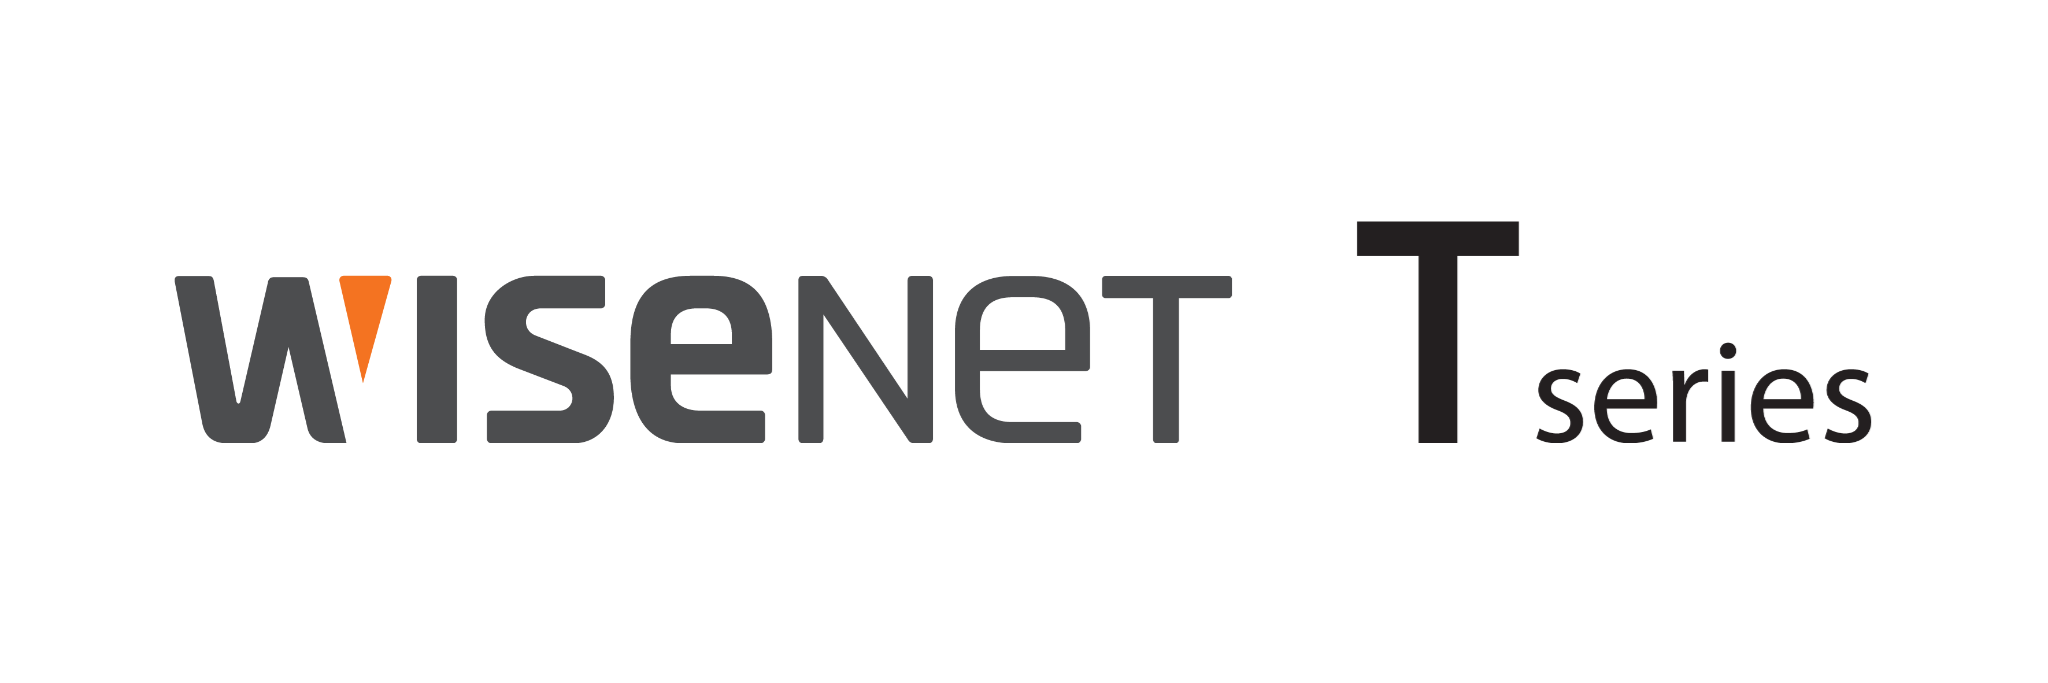 Wisenet T series logo